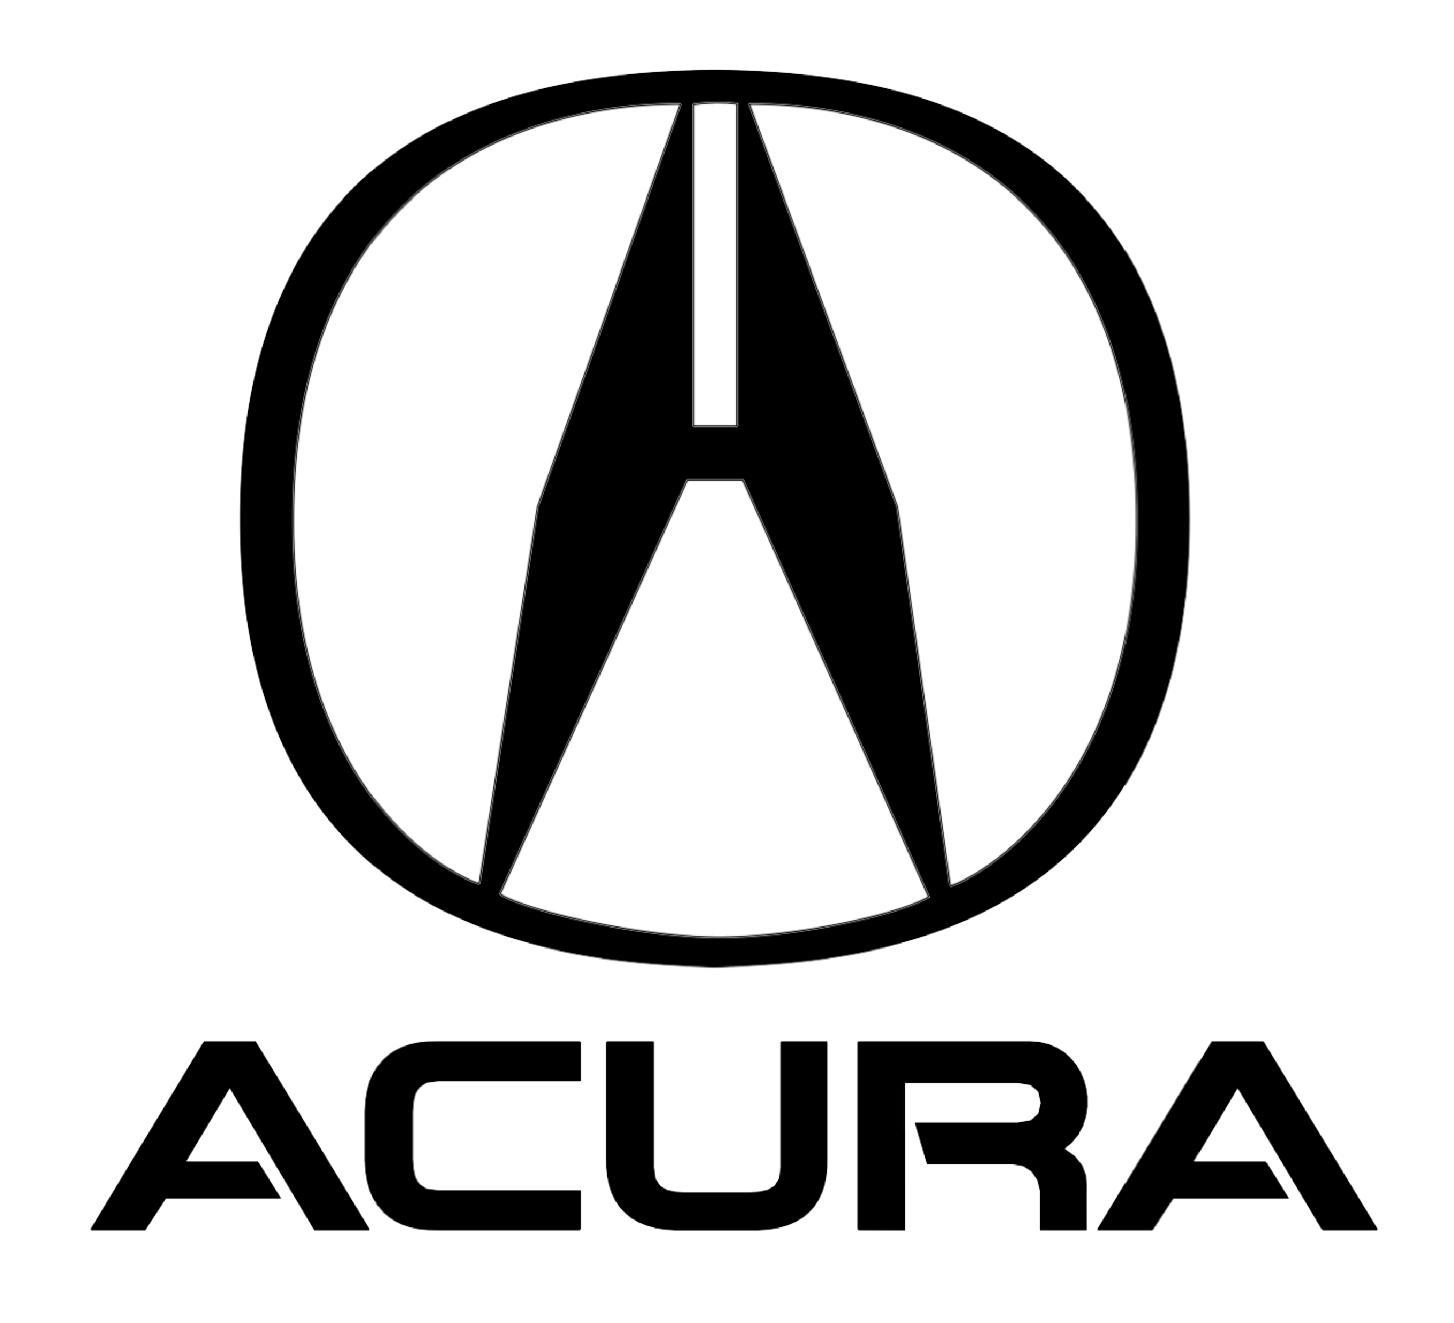 Old Acura Logo - Acura Logo, Acura Car Symbol Meaning and History. Car Brand Names.com